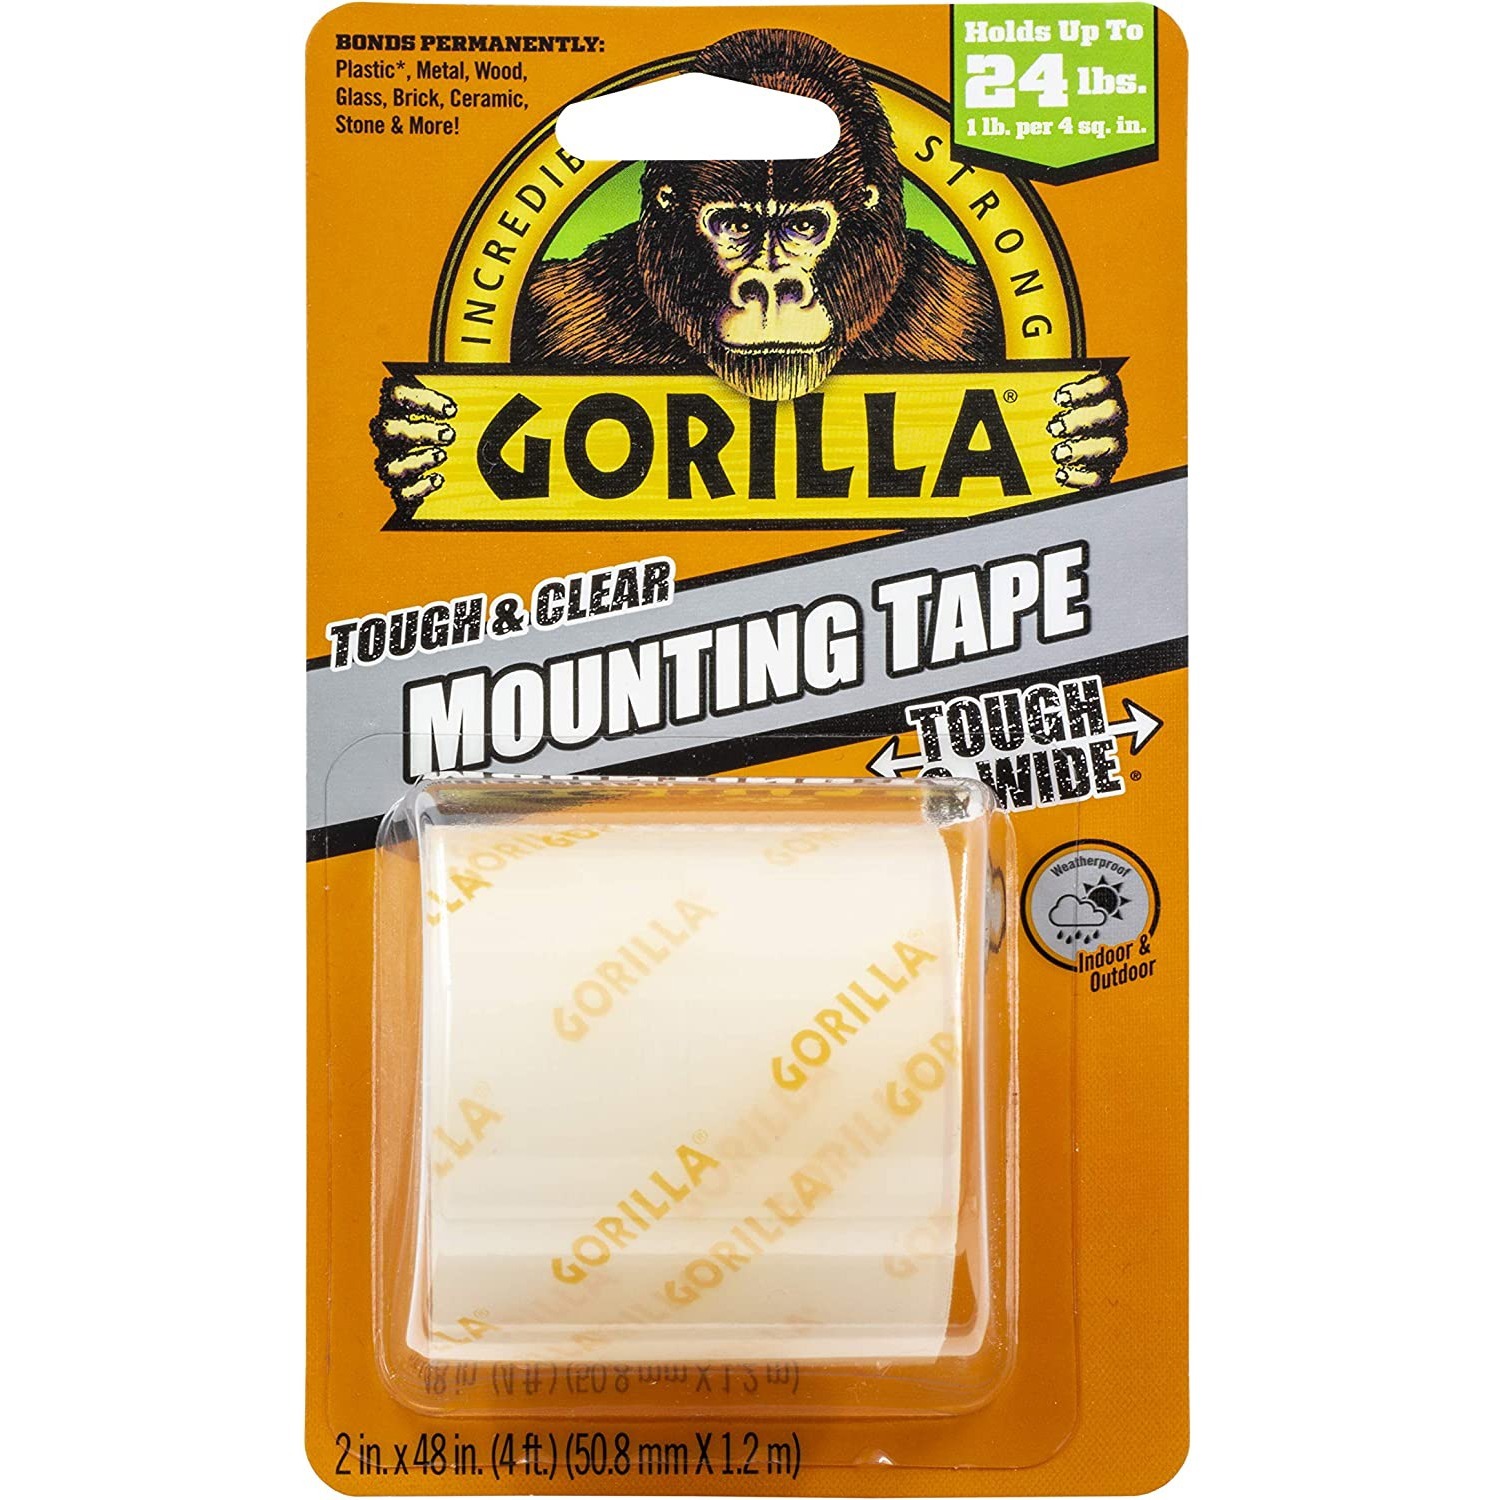 Gorilla 6067202 Tough & Clear Mounting Squares